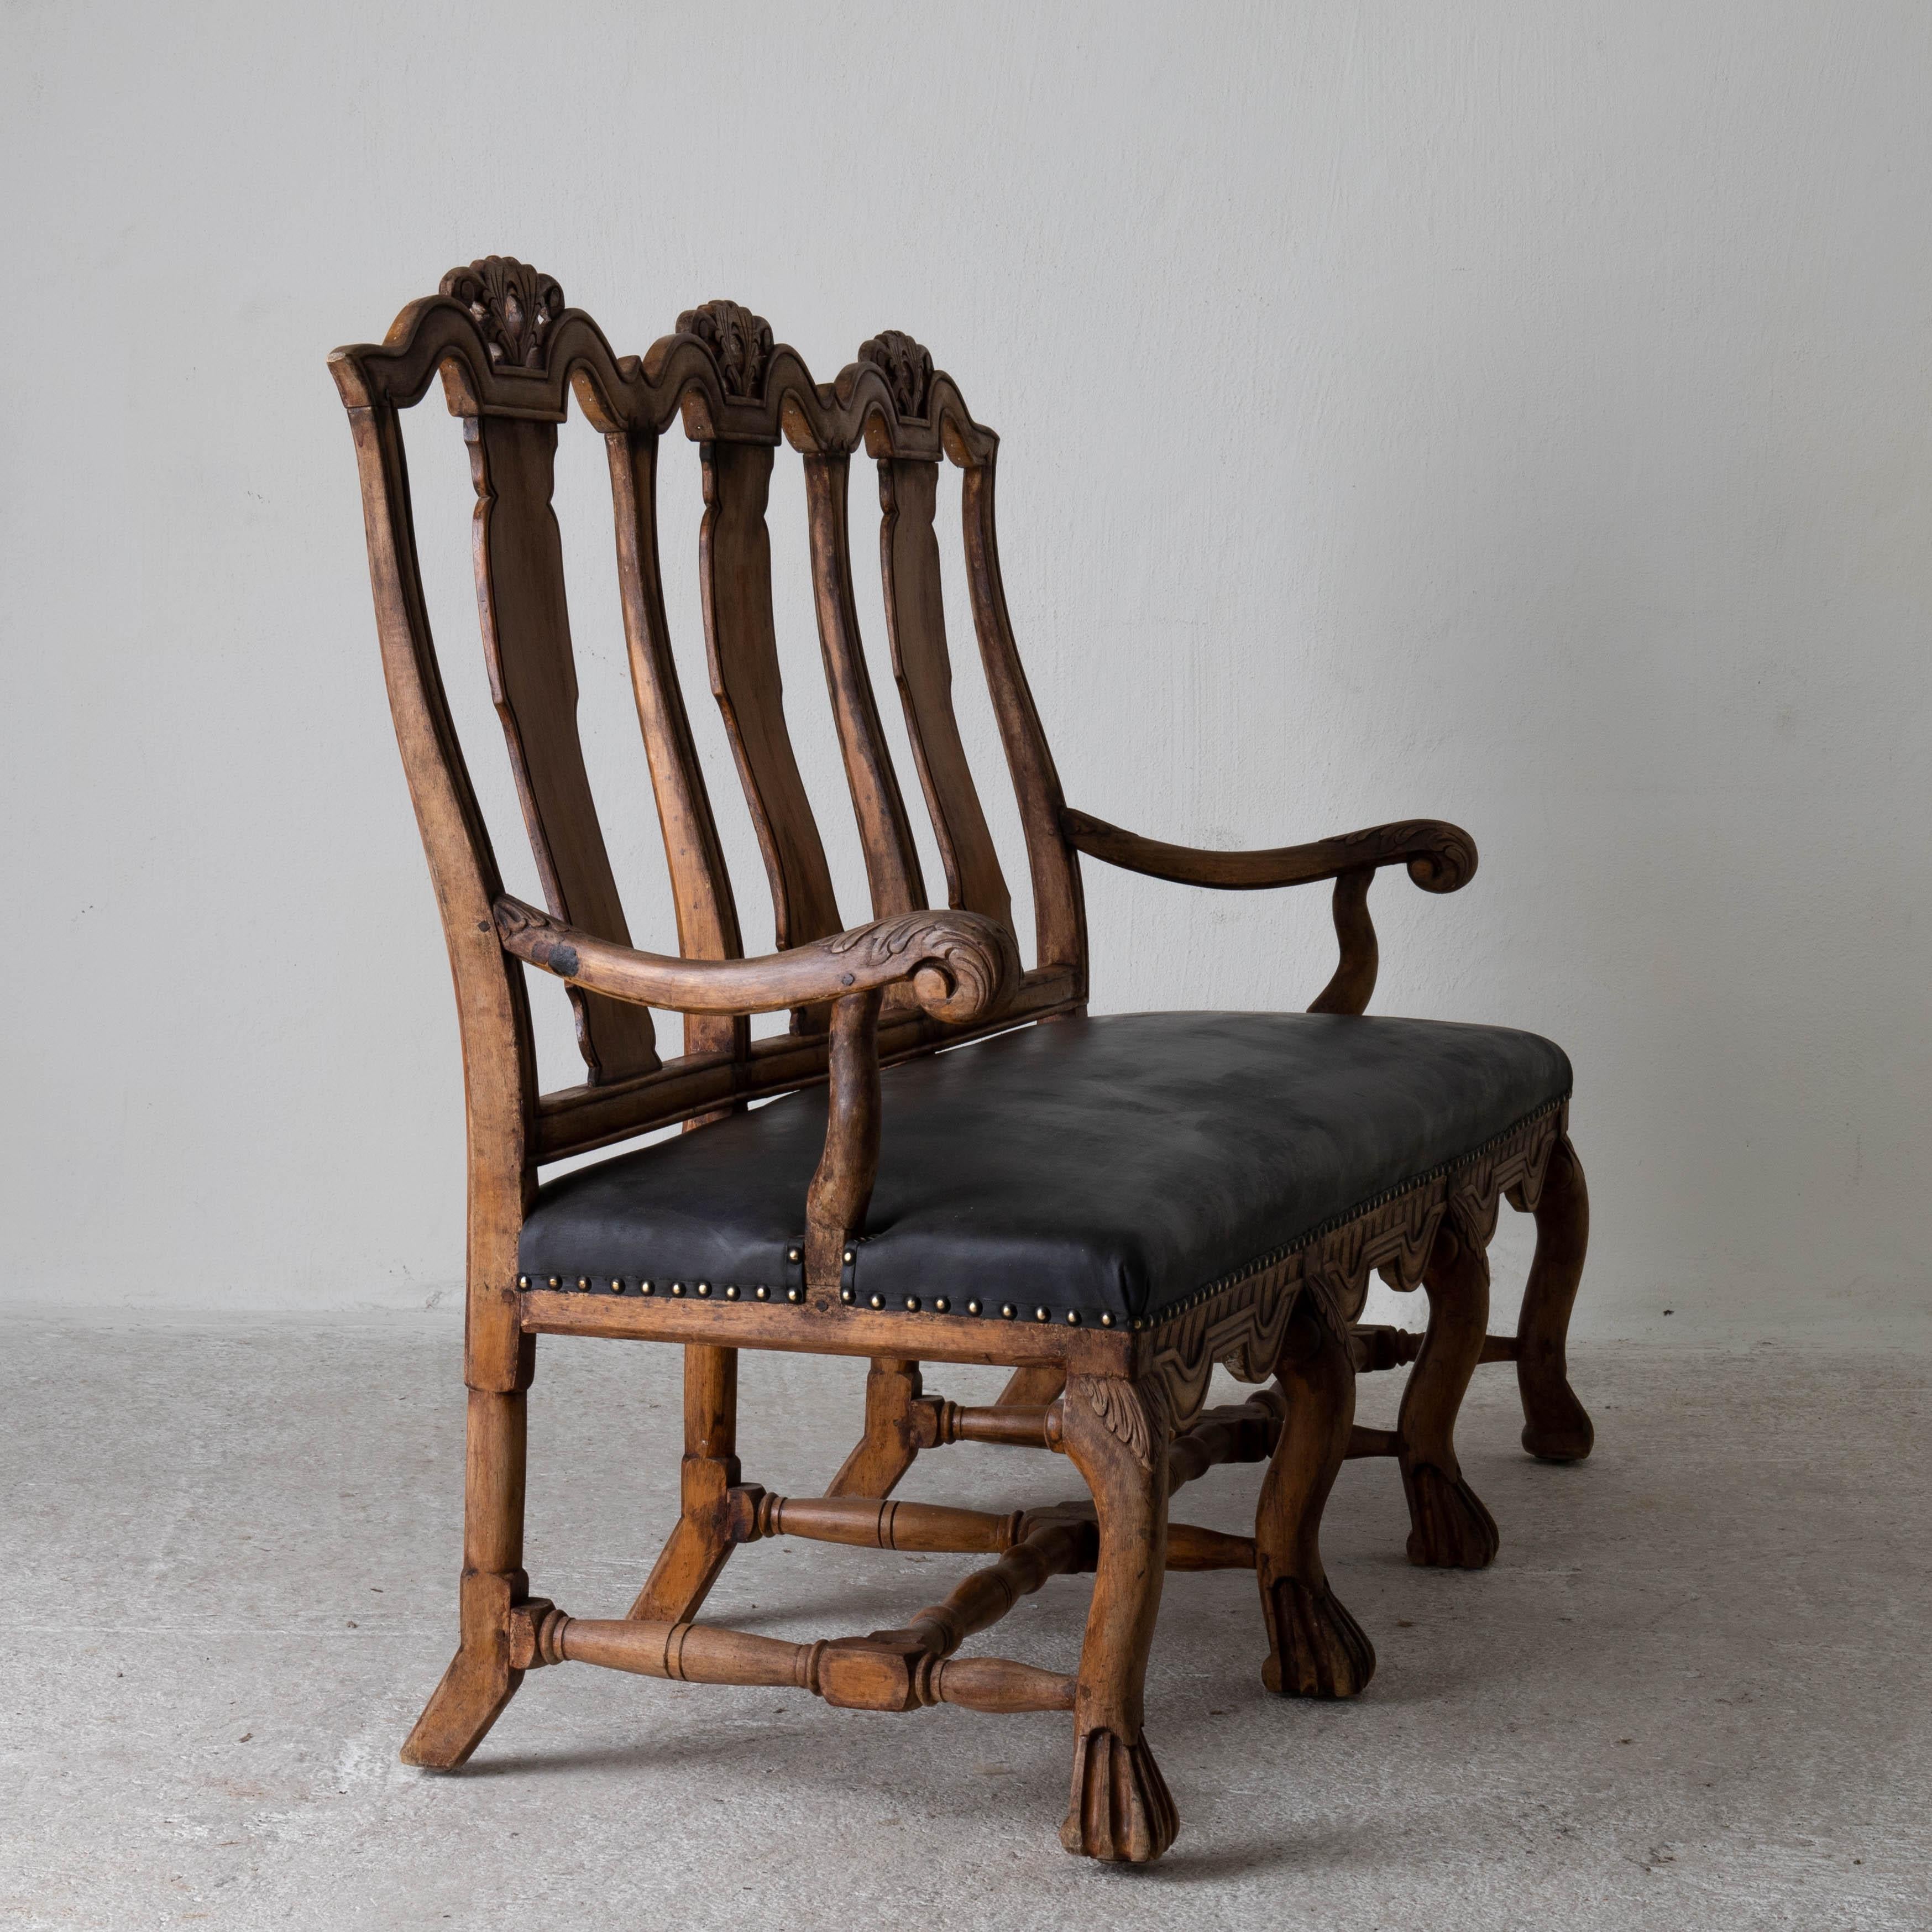 Sofa Bench Swedish Baroque Period 1650-1750 Brown Black, Sweden For Sale 6